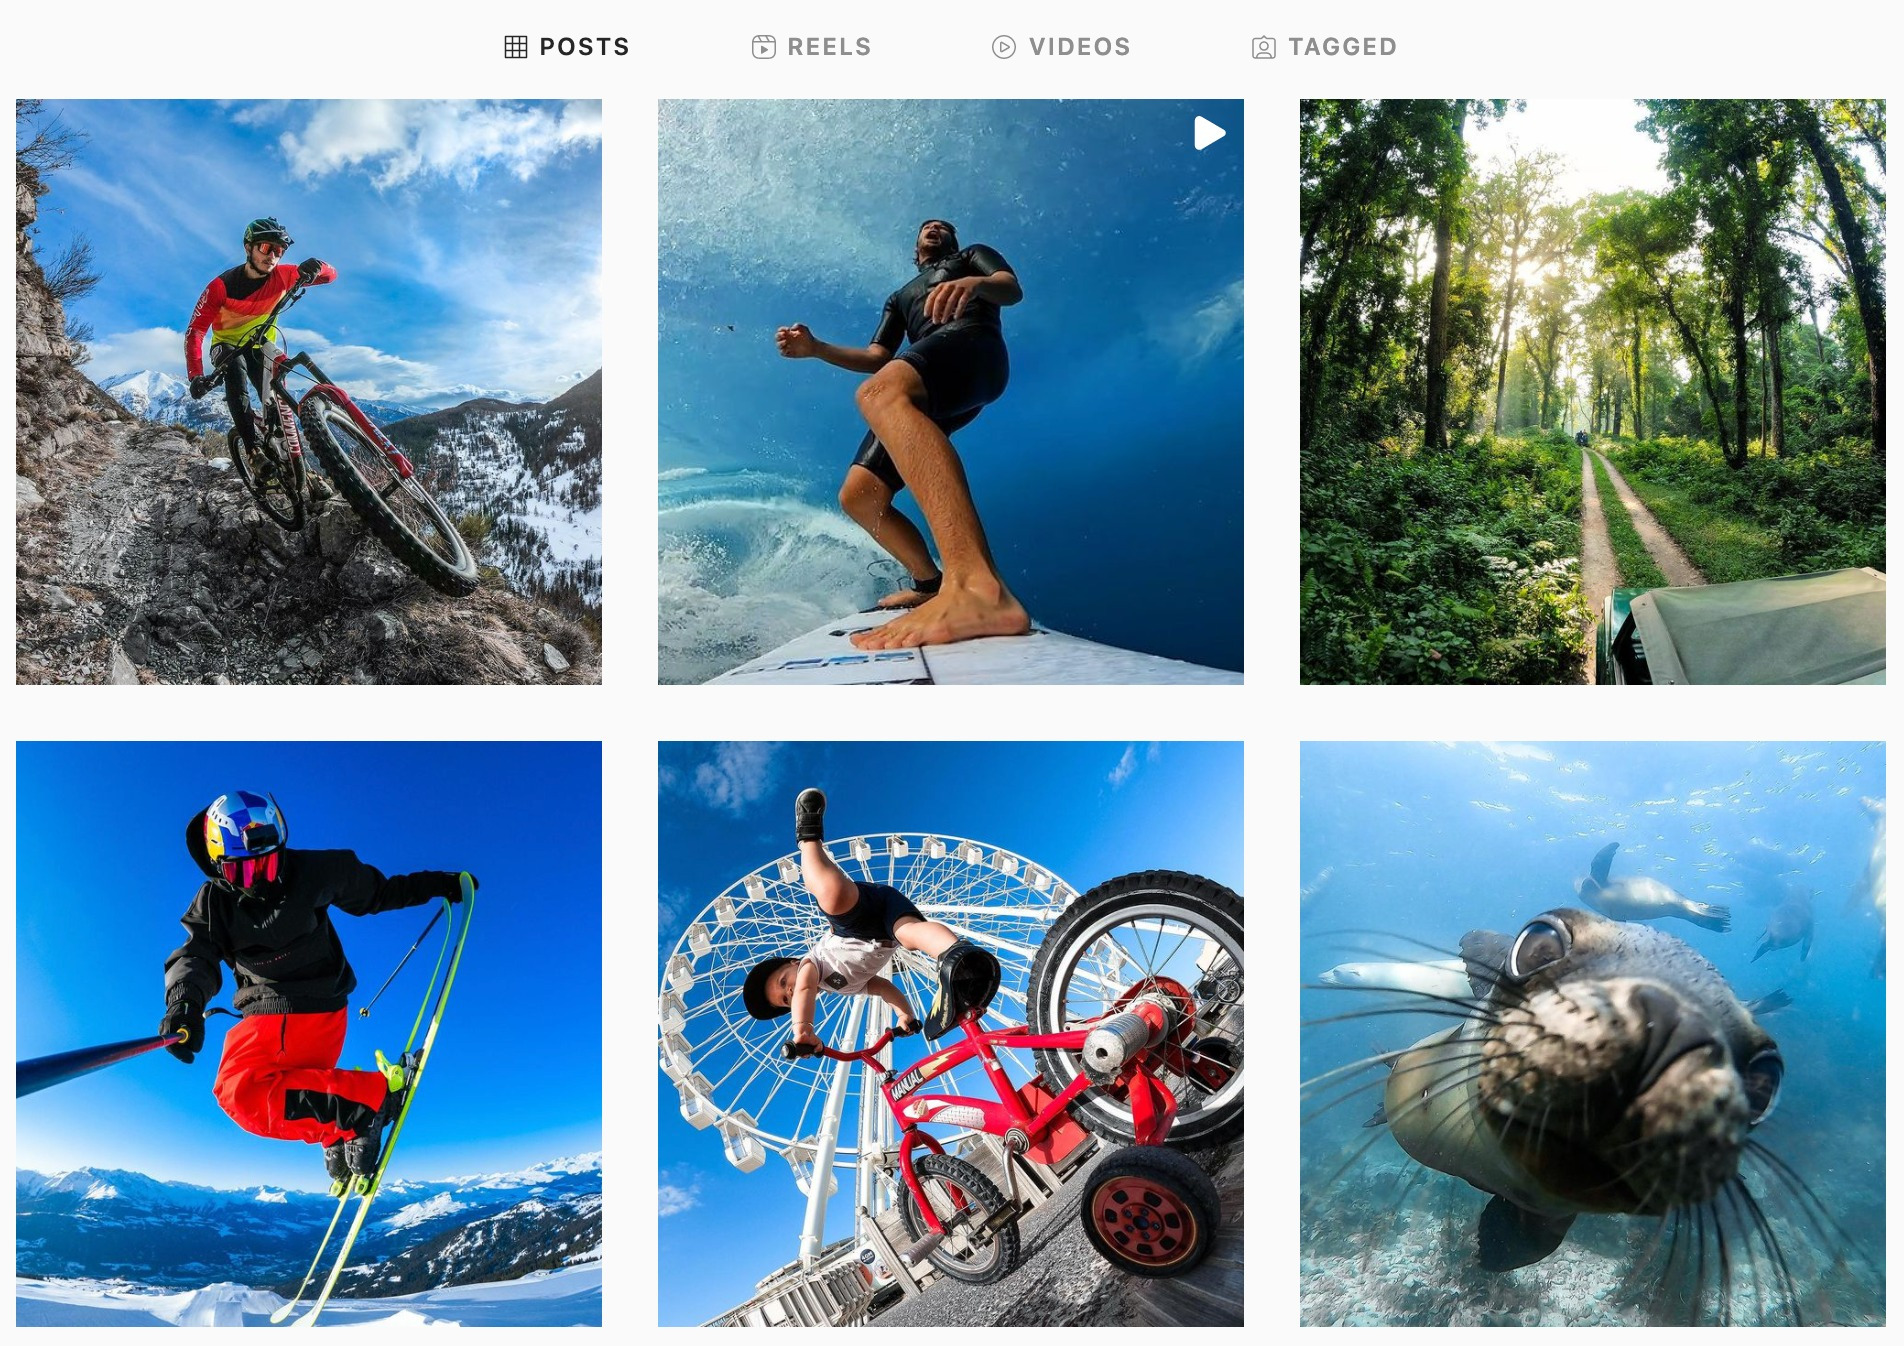 GoPro's Instagram posts